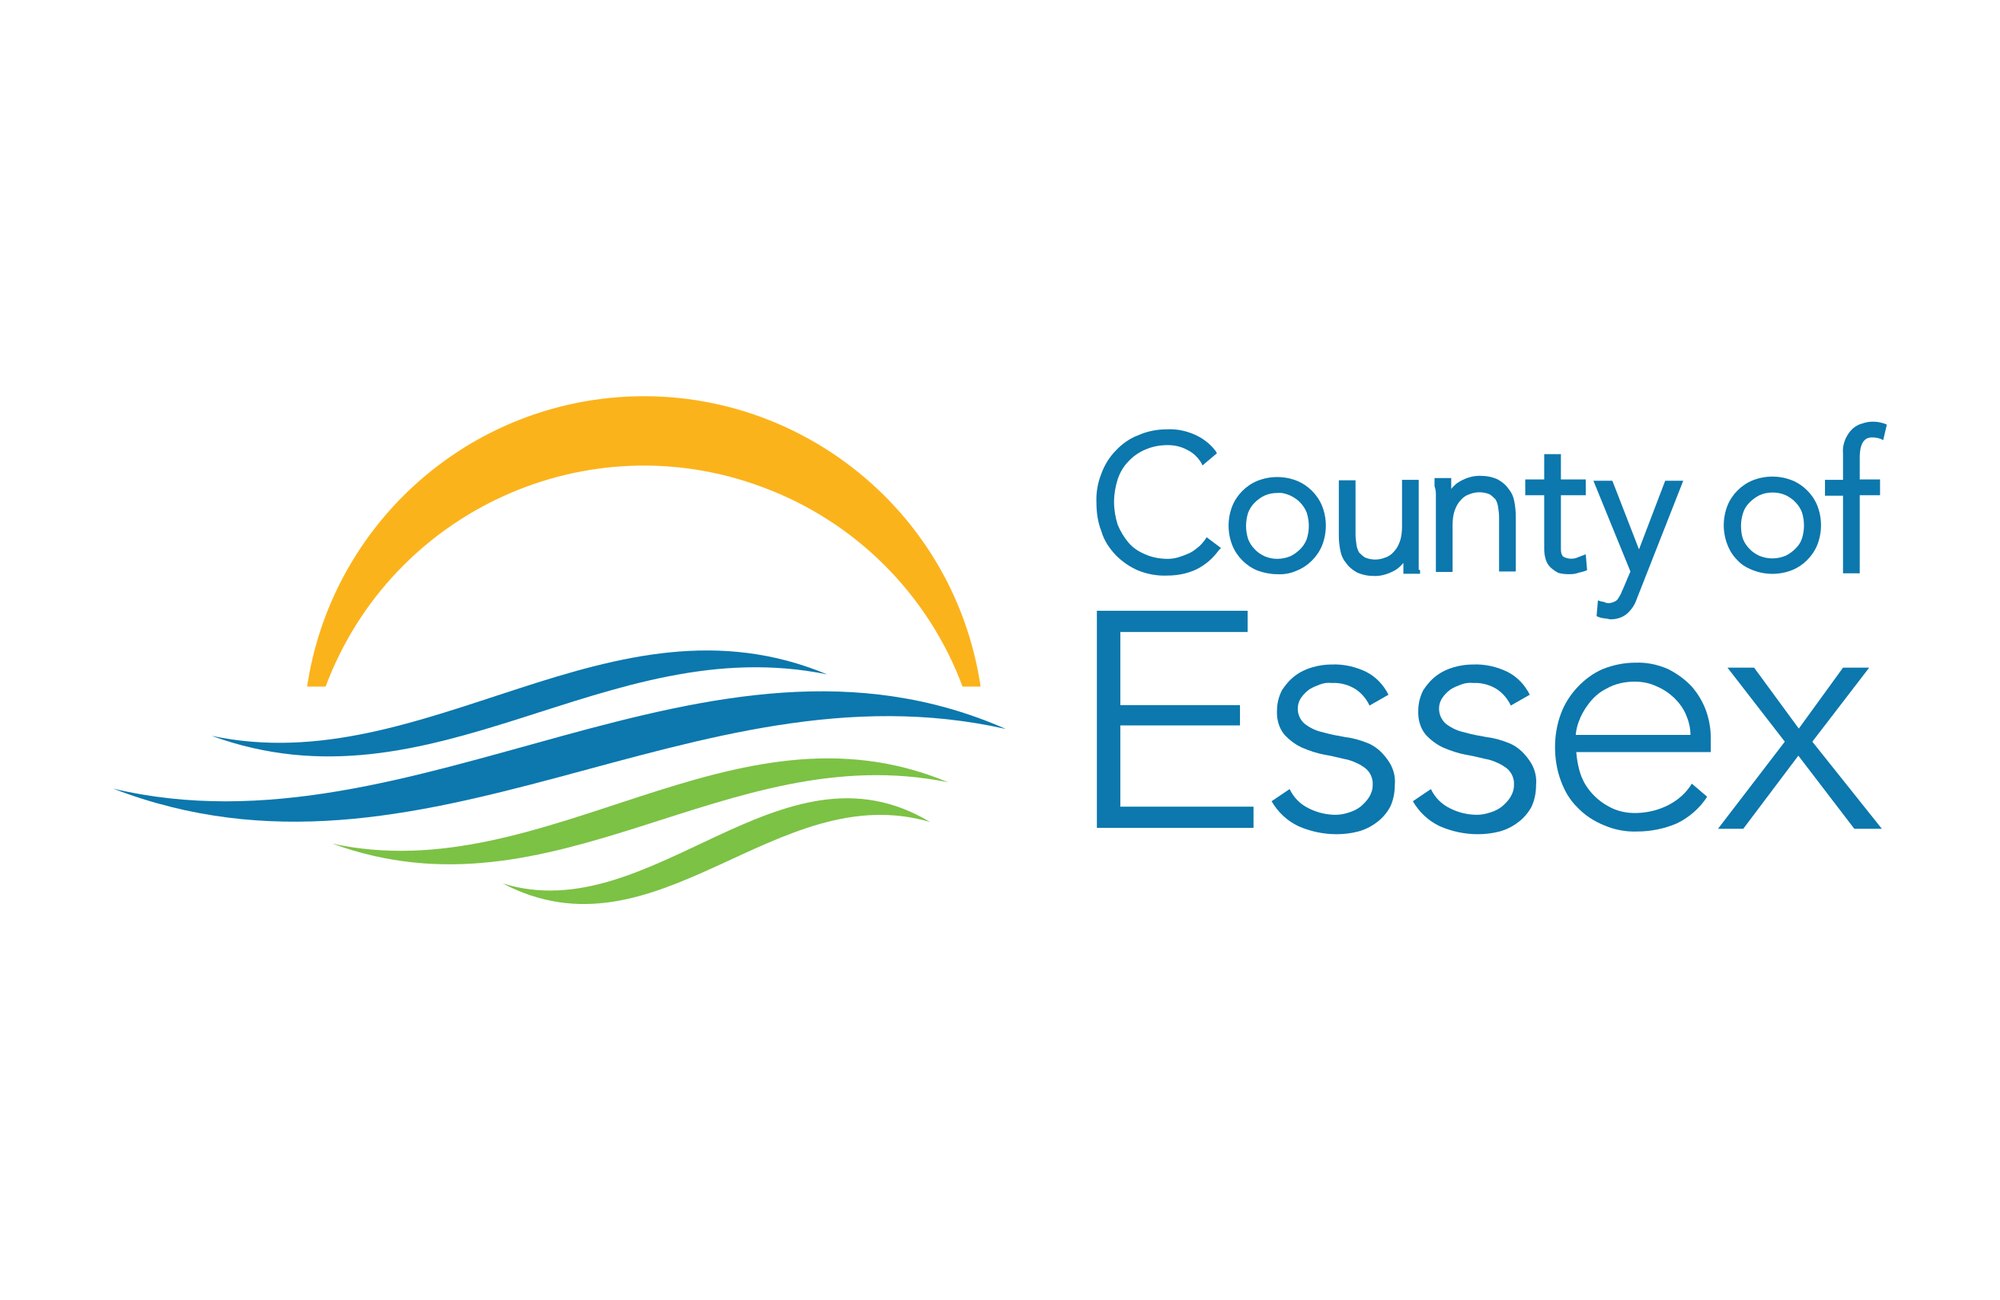 Essex County